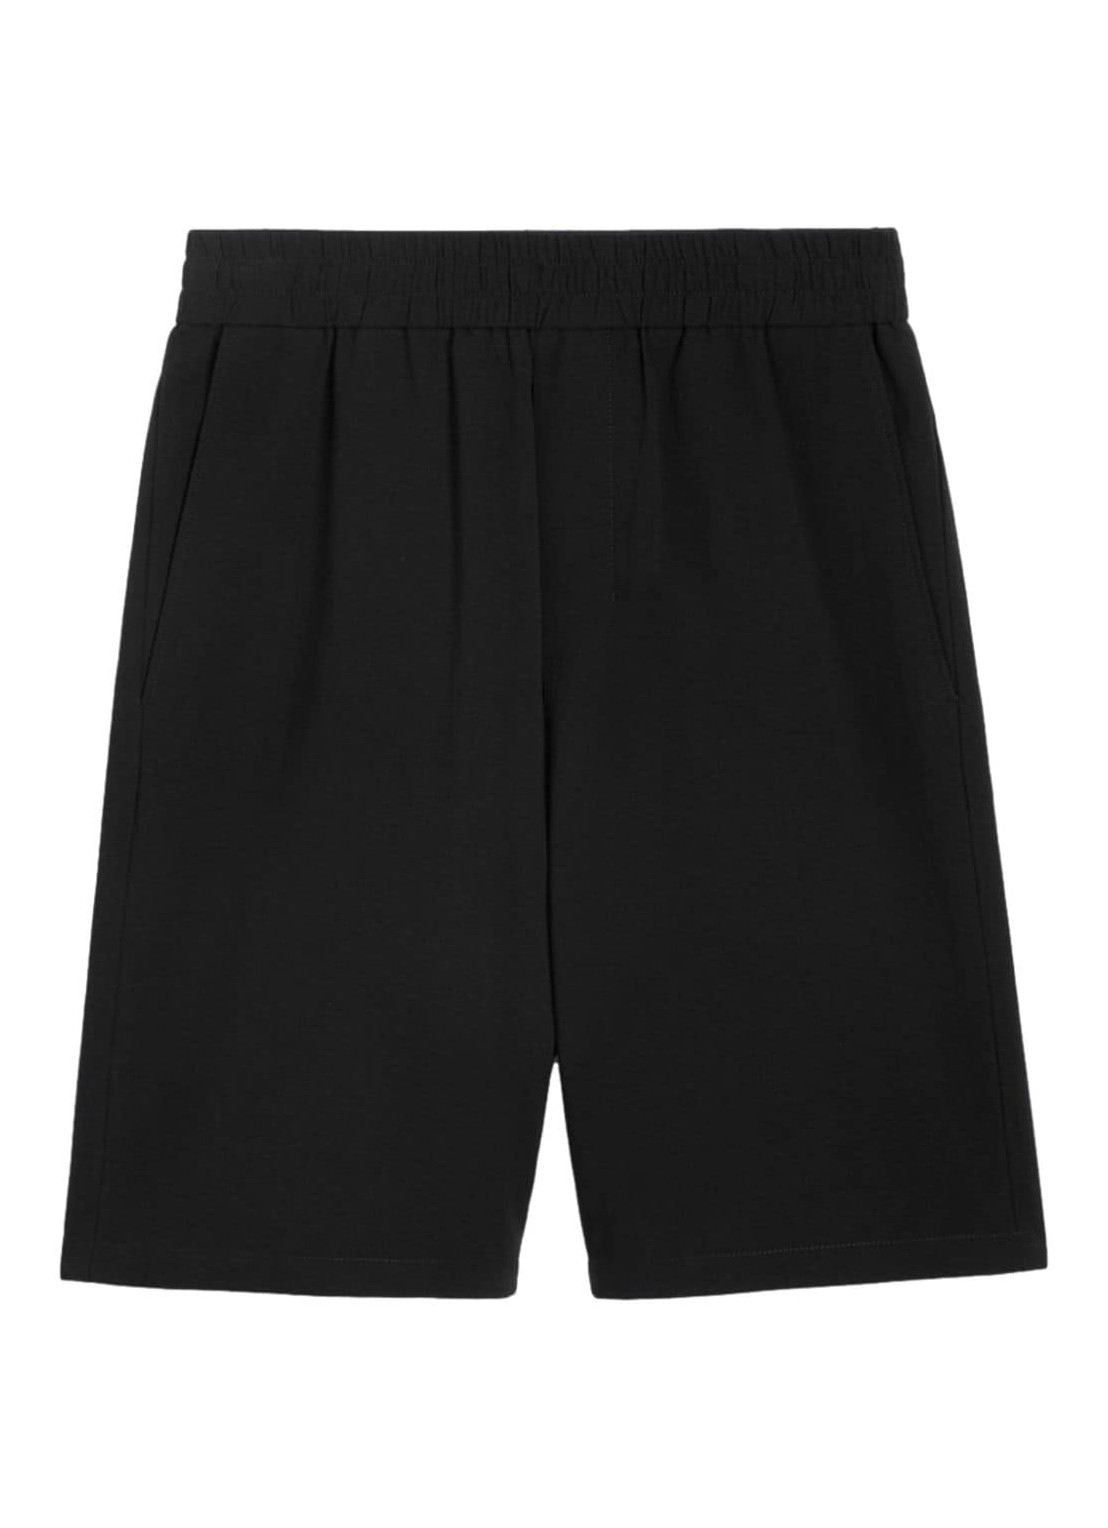 Pantalon corto ami short pant manelasticated waist bermuda - hso306co0062 001 talla L
 